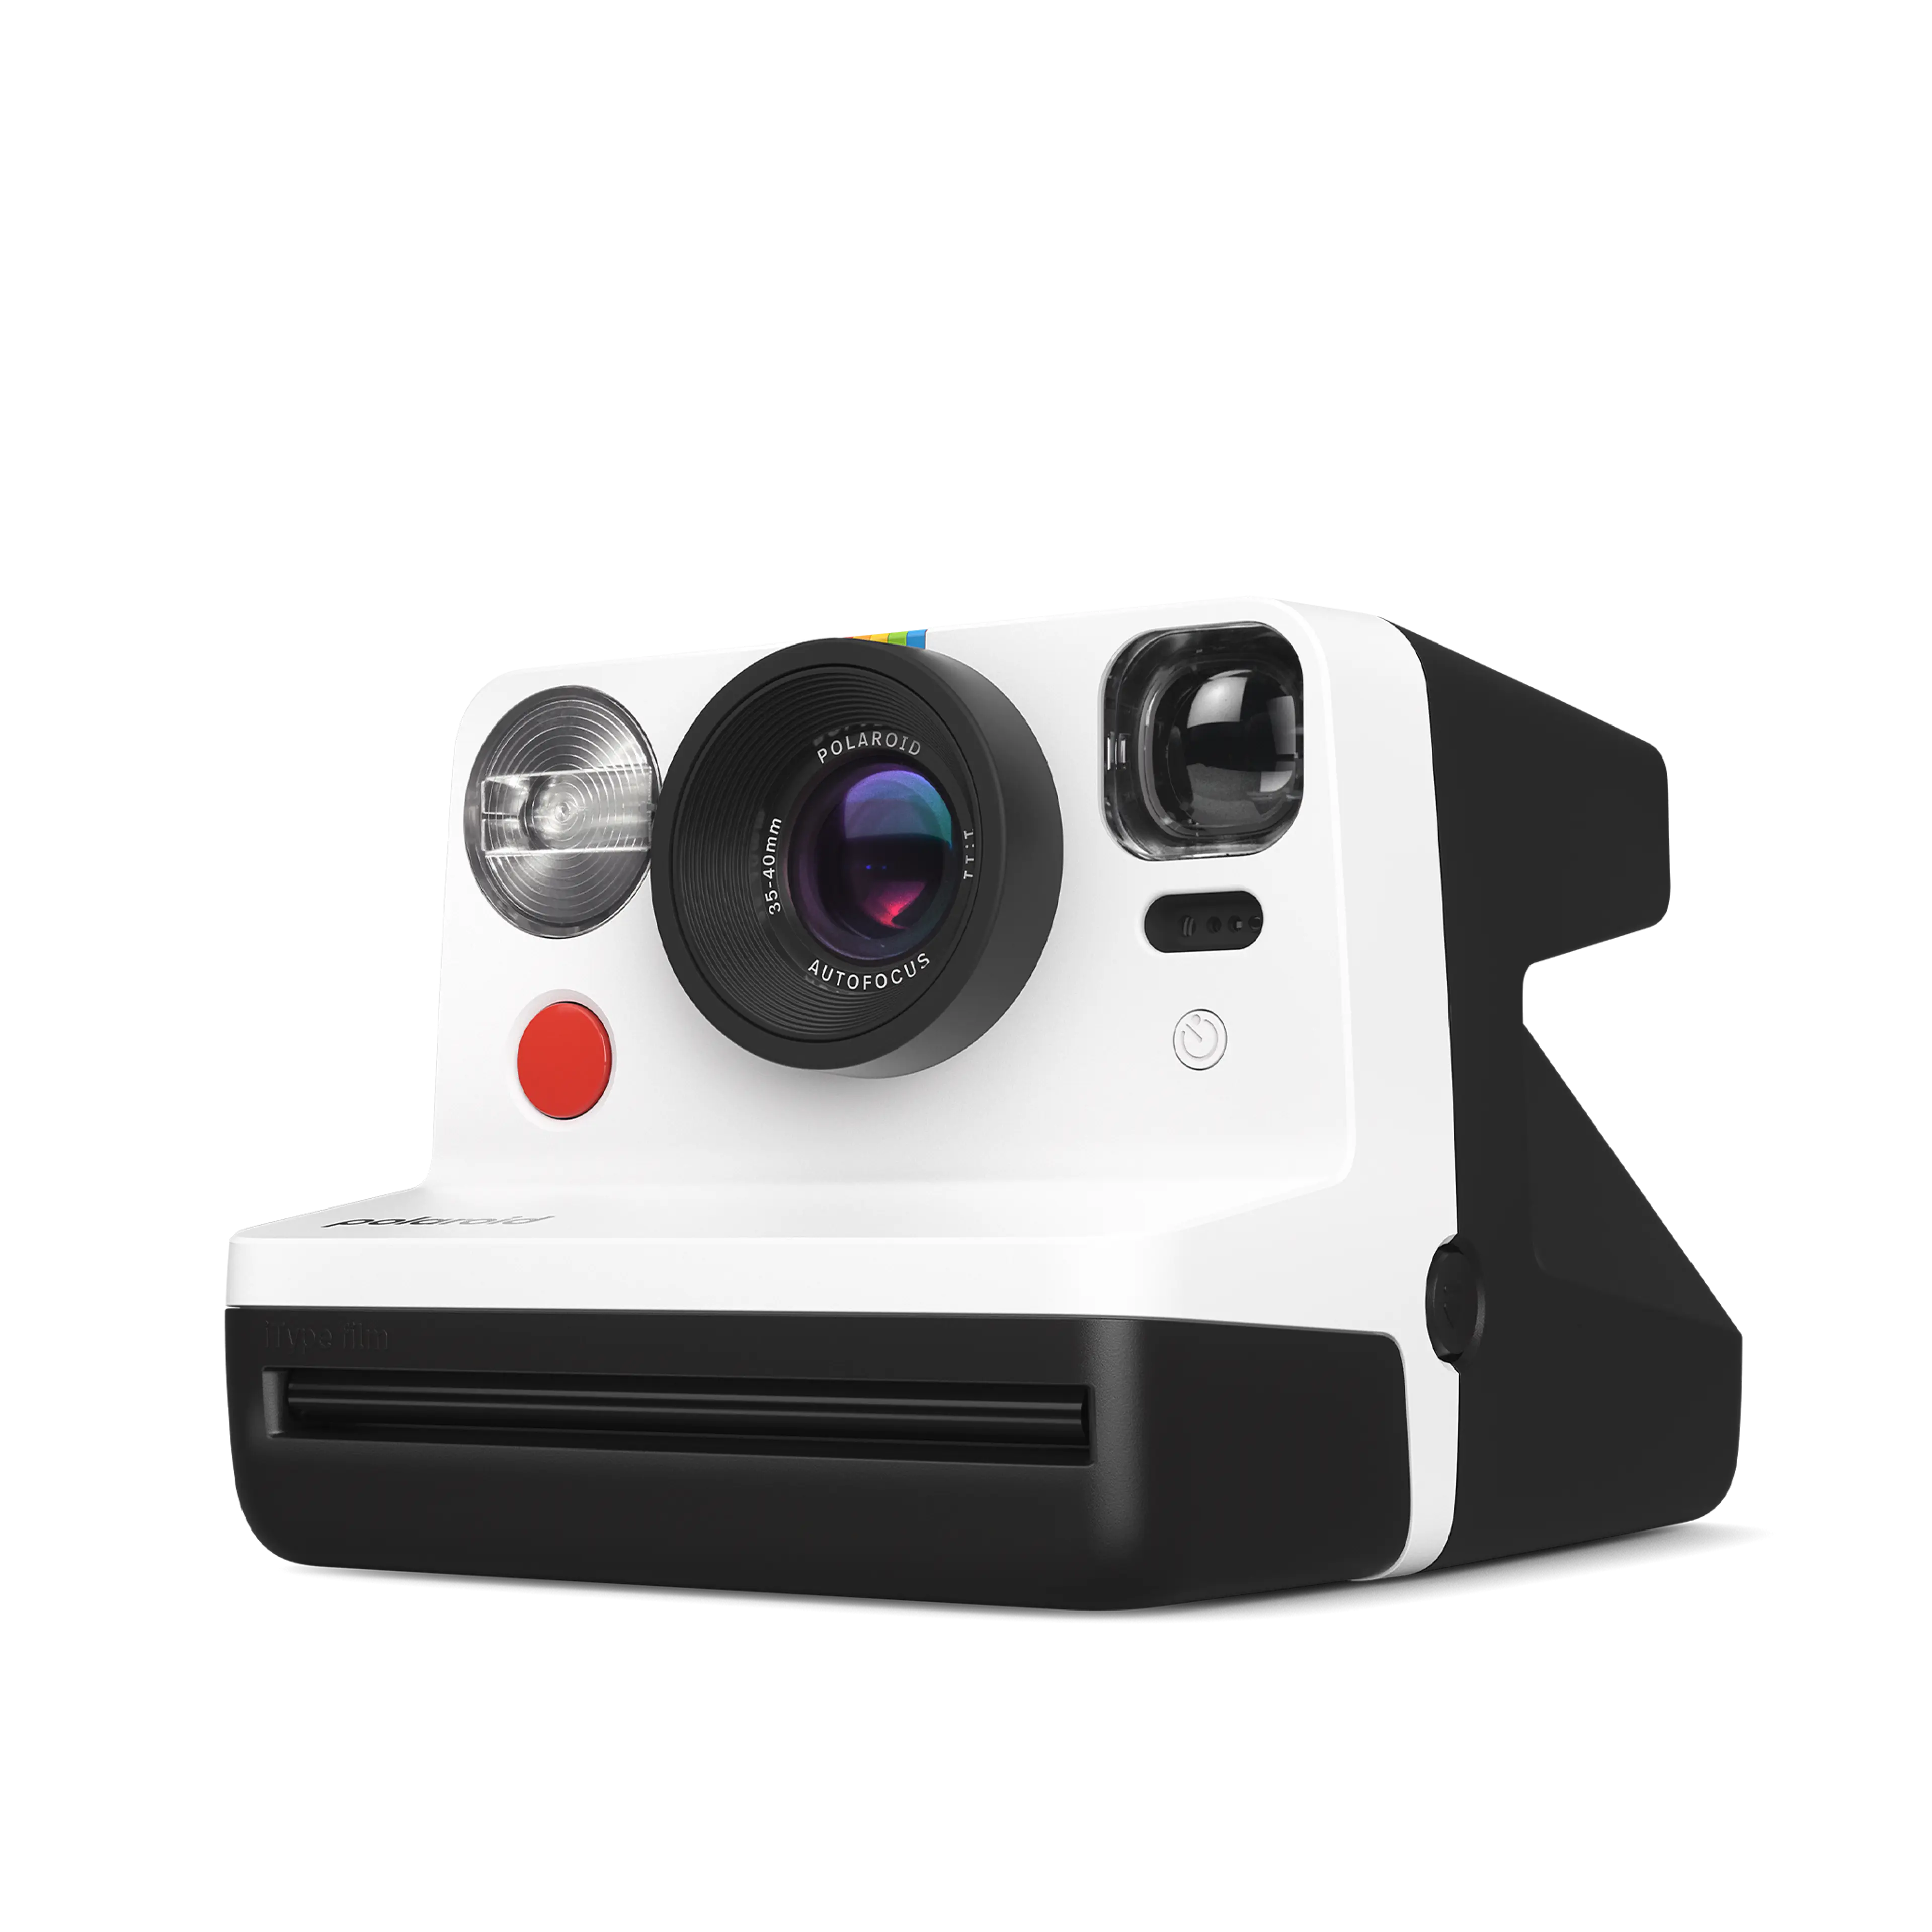 Polaroid (ポラロイド) Now Camera – VISTAL VISION / Polaroid 公式ショップ